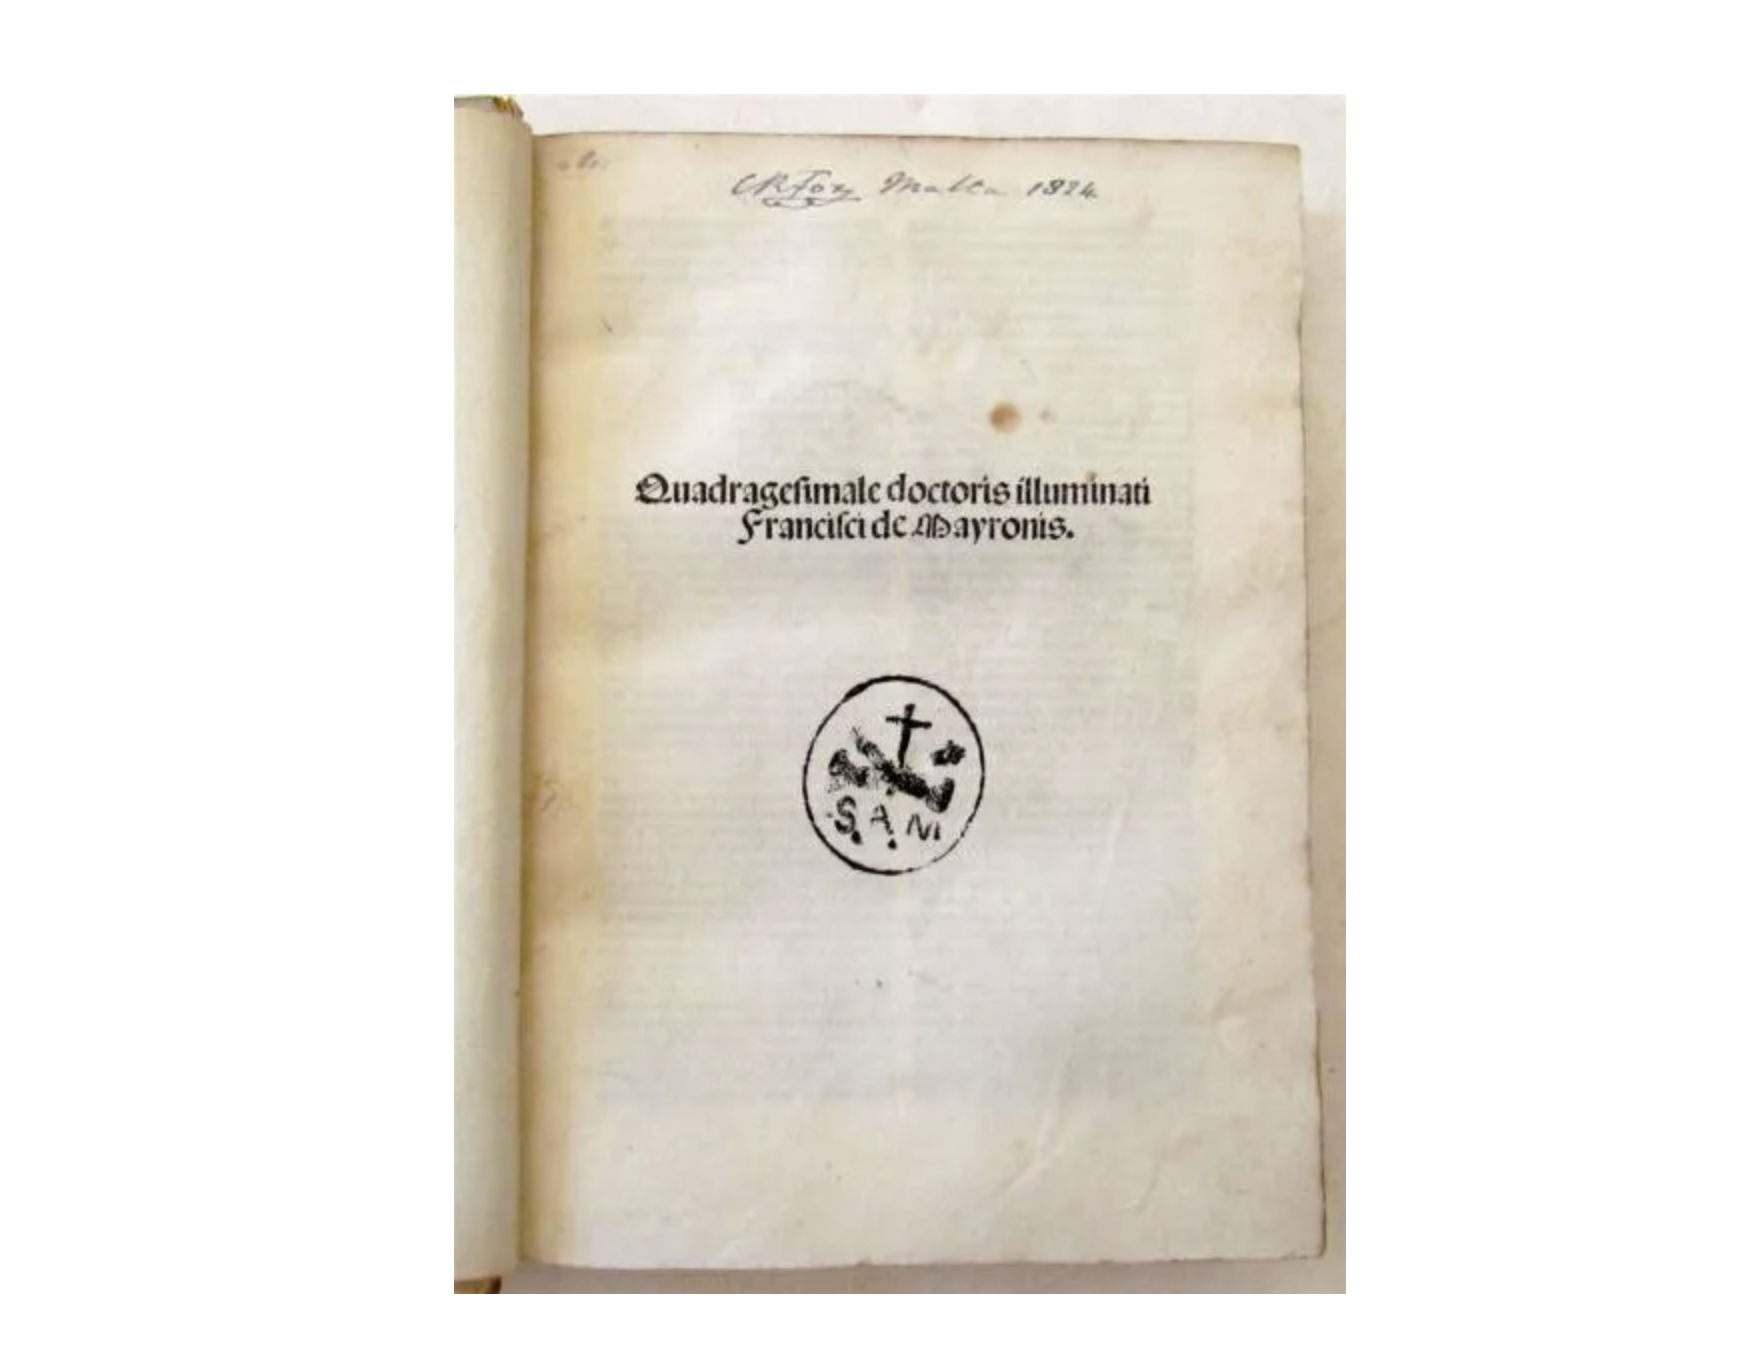 1491 book of sermons by Franciscus de Maioranis, est. $4,000-$5,000